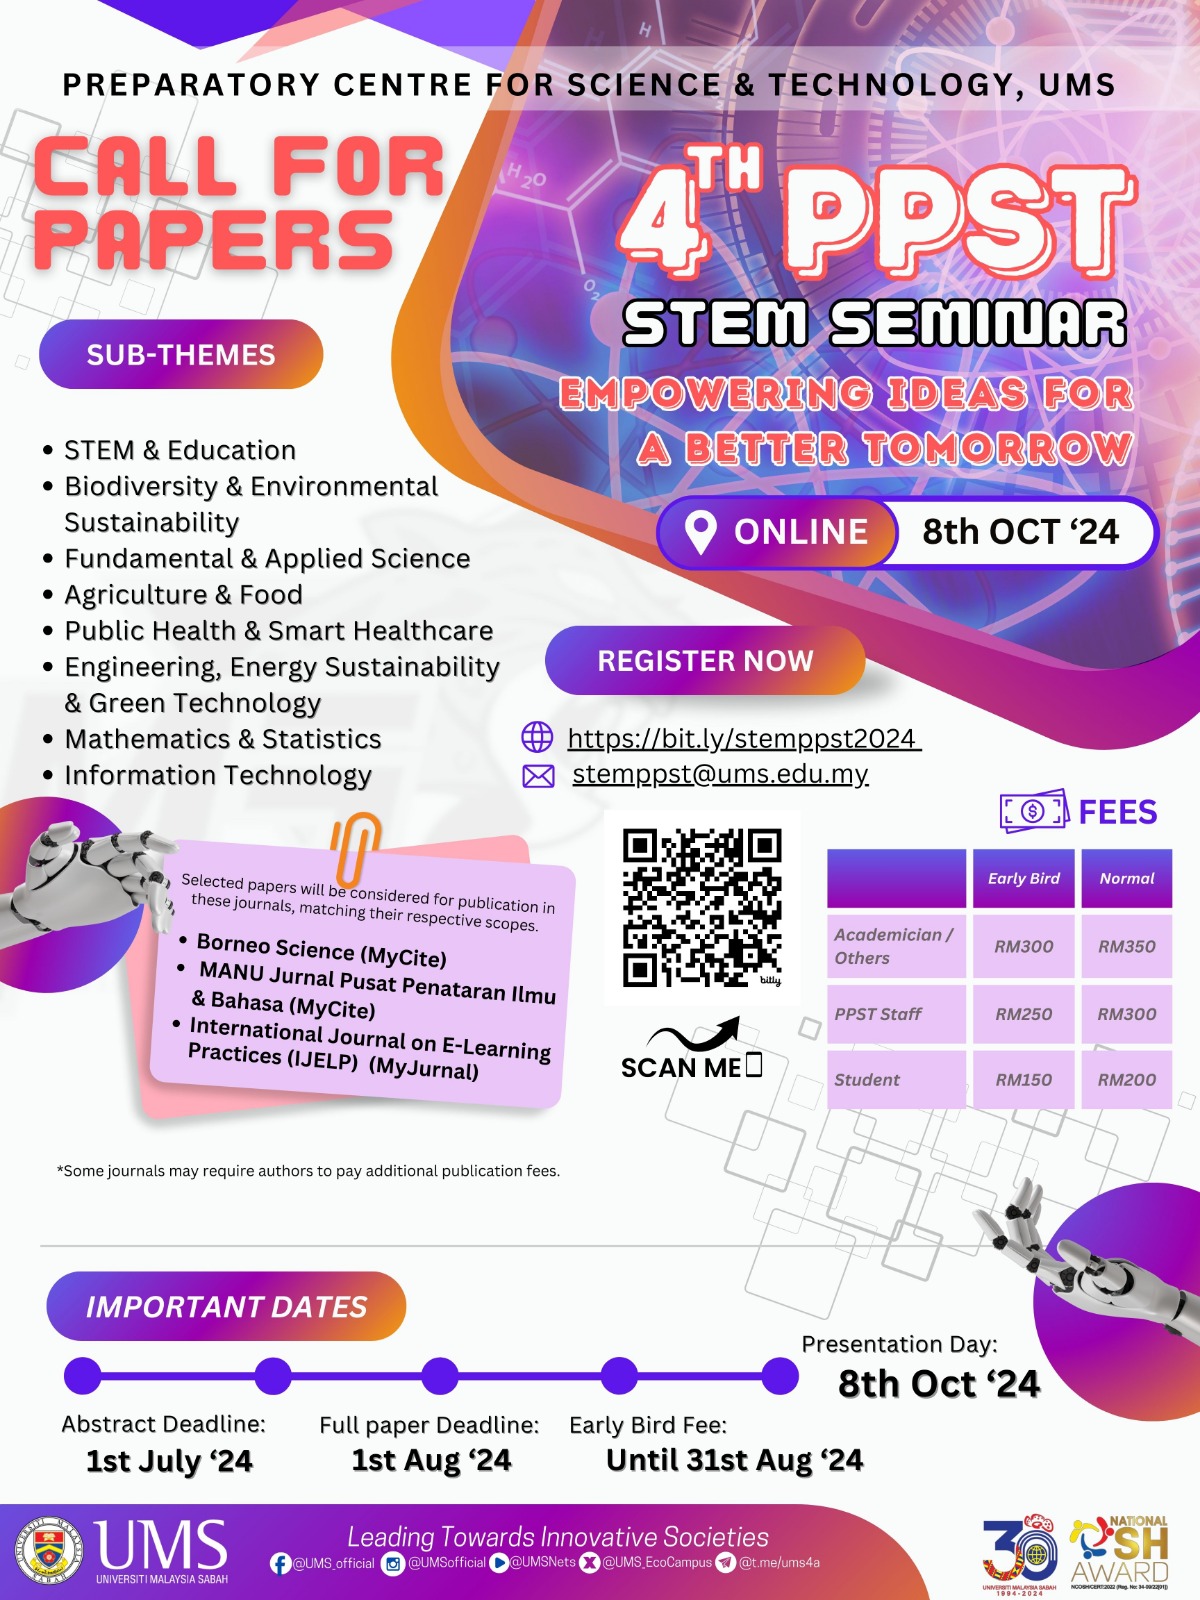 PPST STEM Seminar